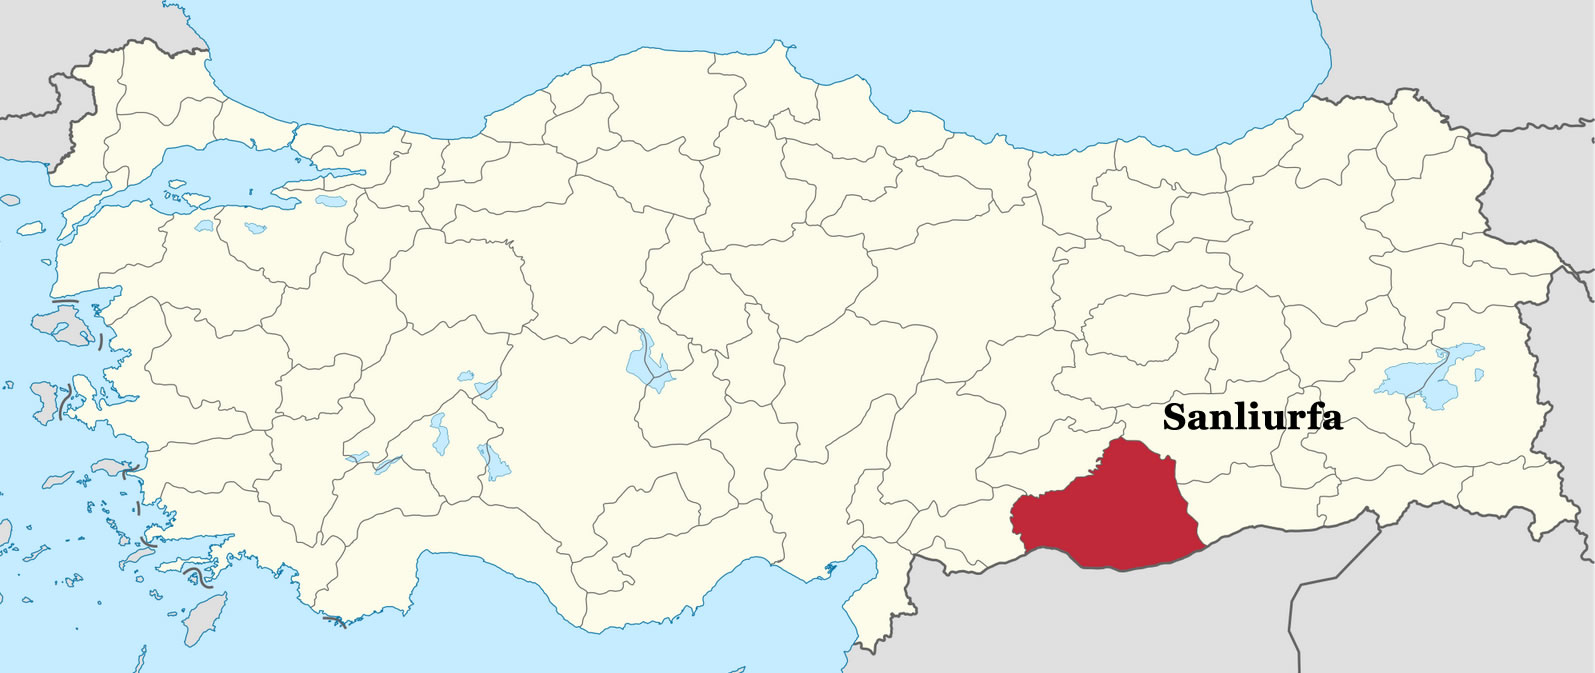 sanliurfa location map